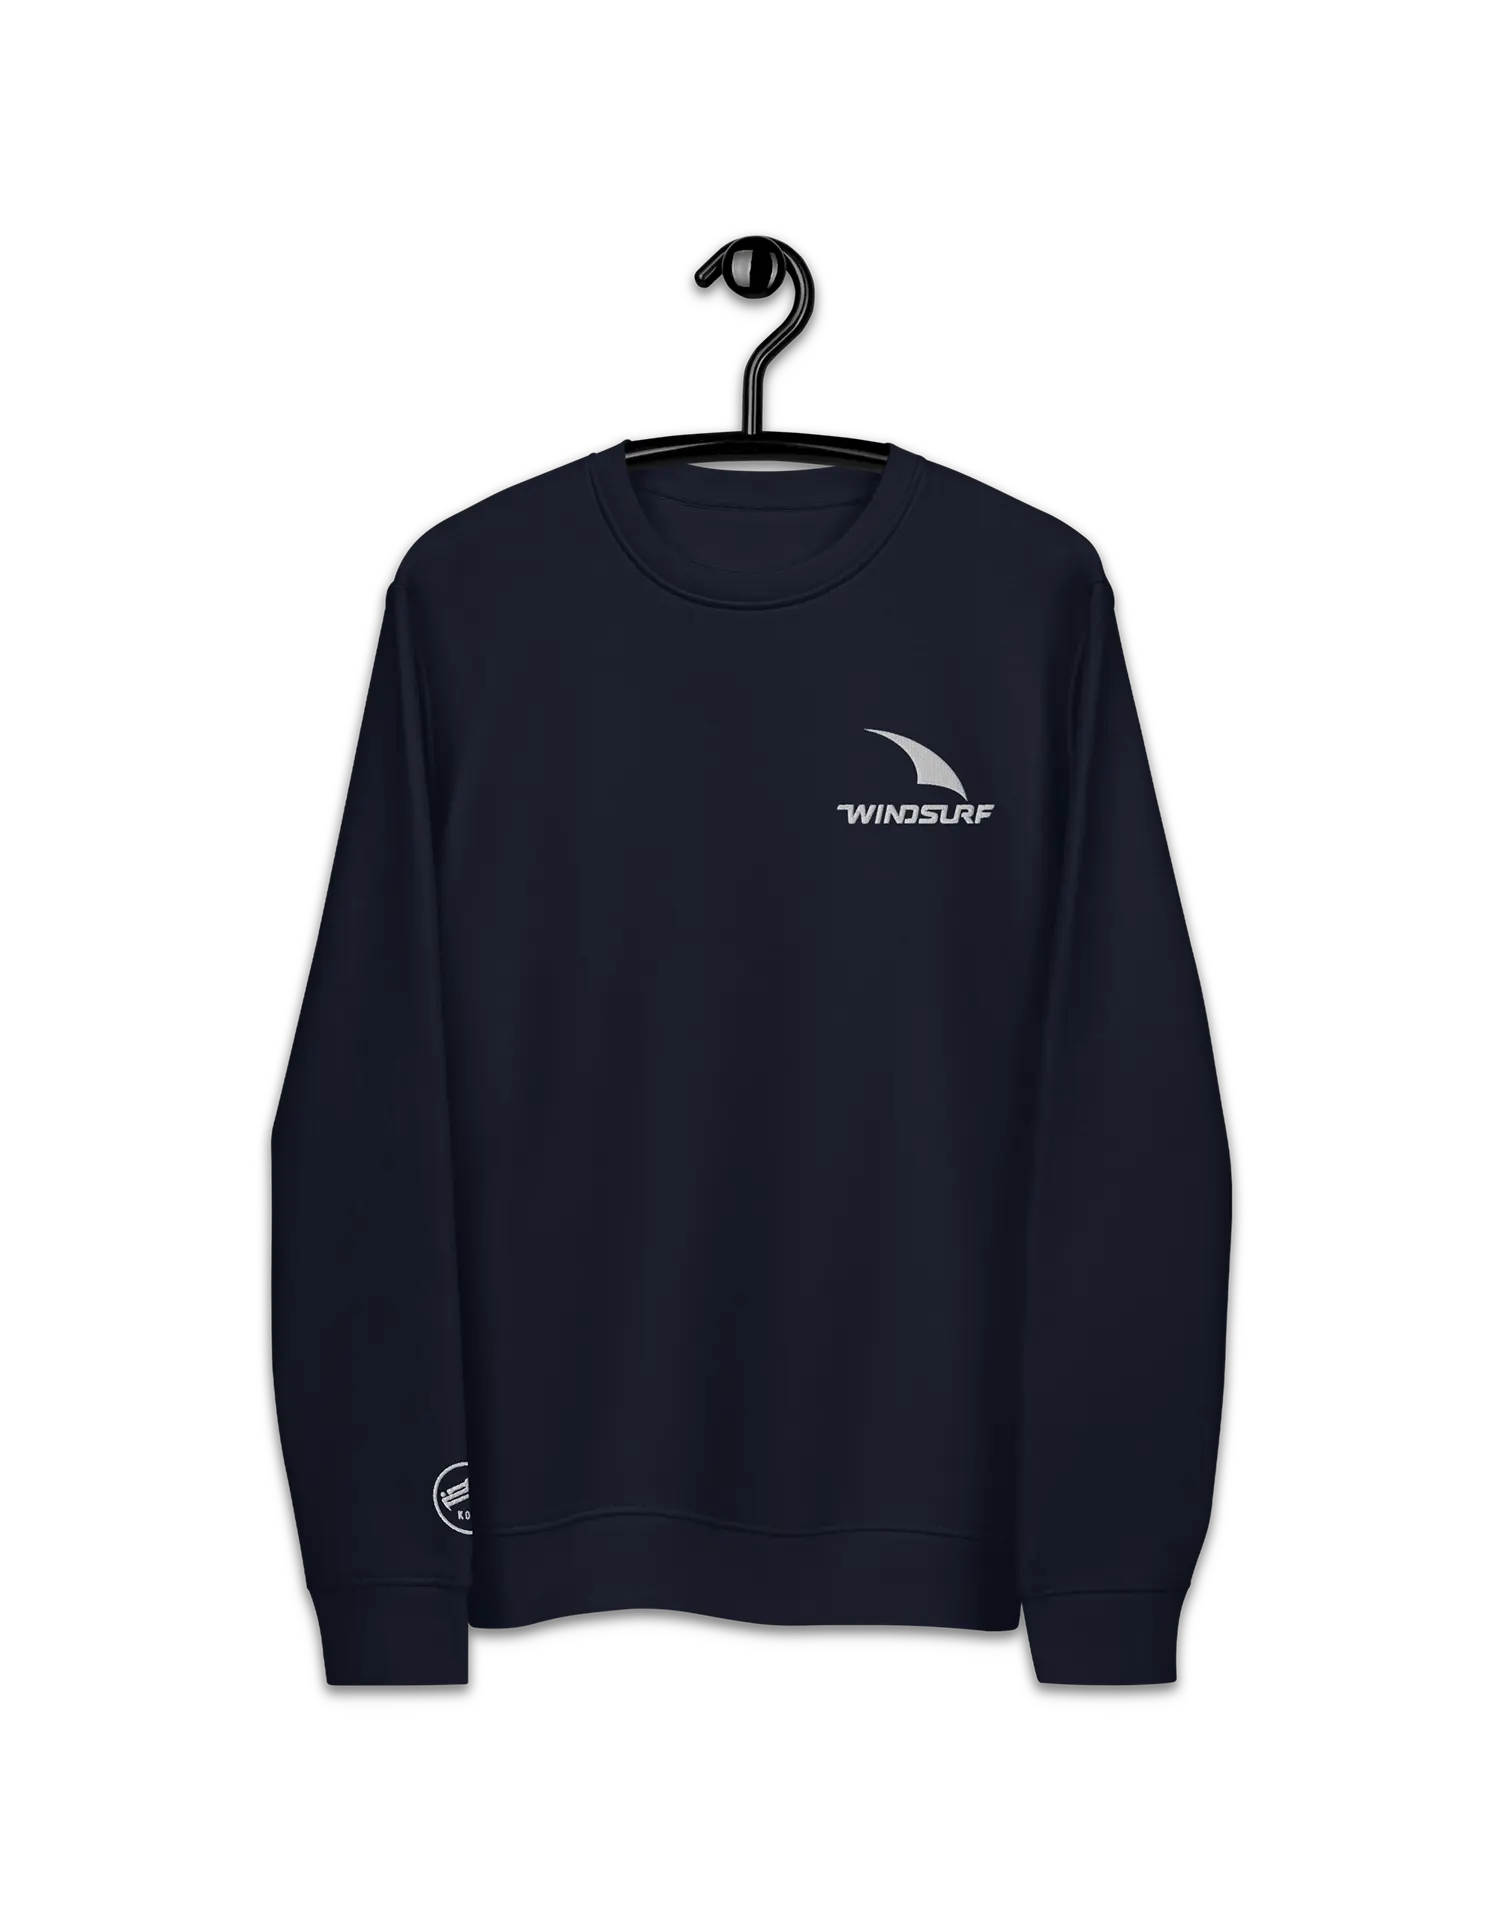 Windsurf Logo Embroidered French Navy Premium Organic Cotton Eco-friendly Sweater by KOAV